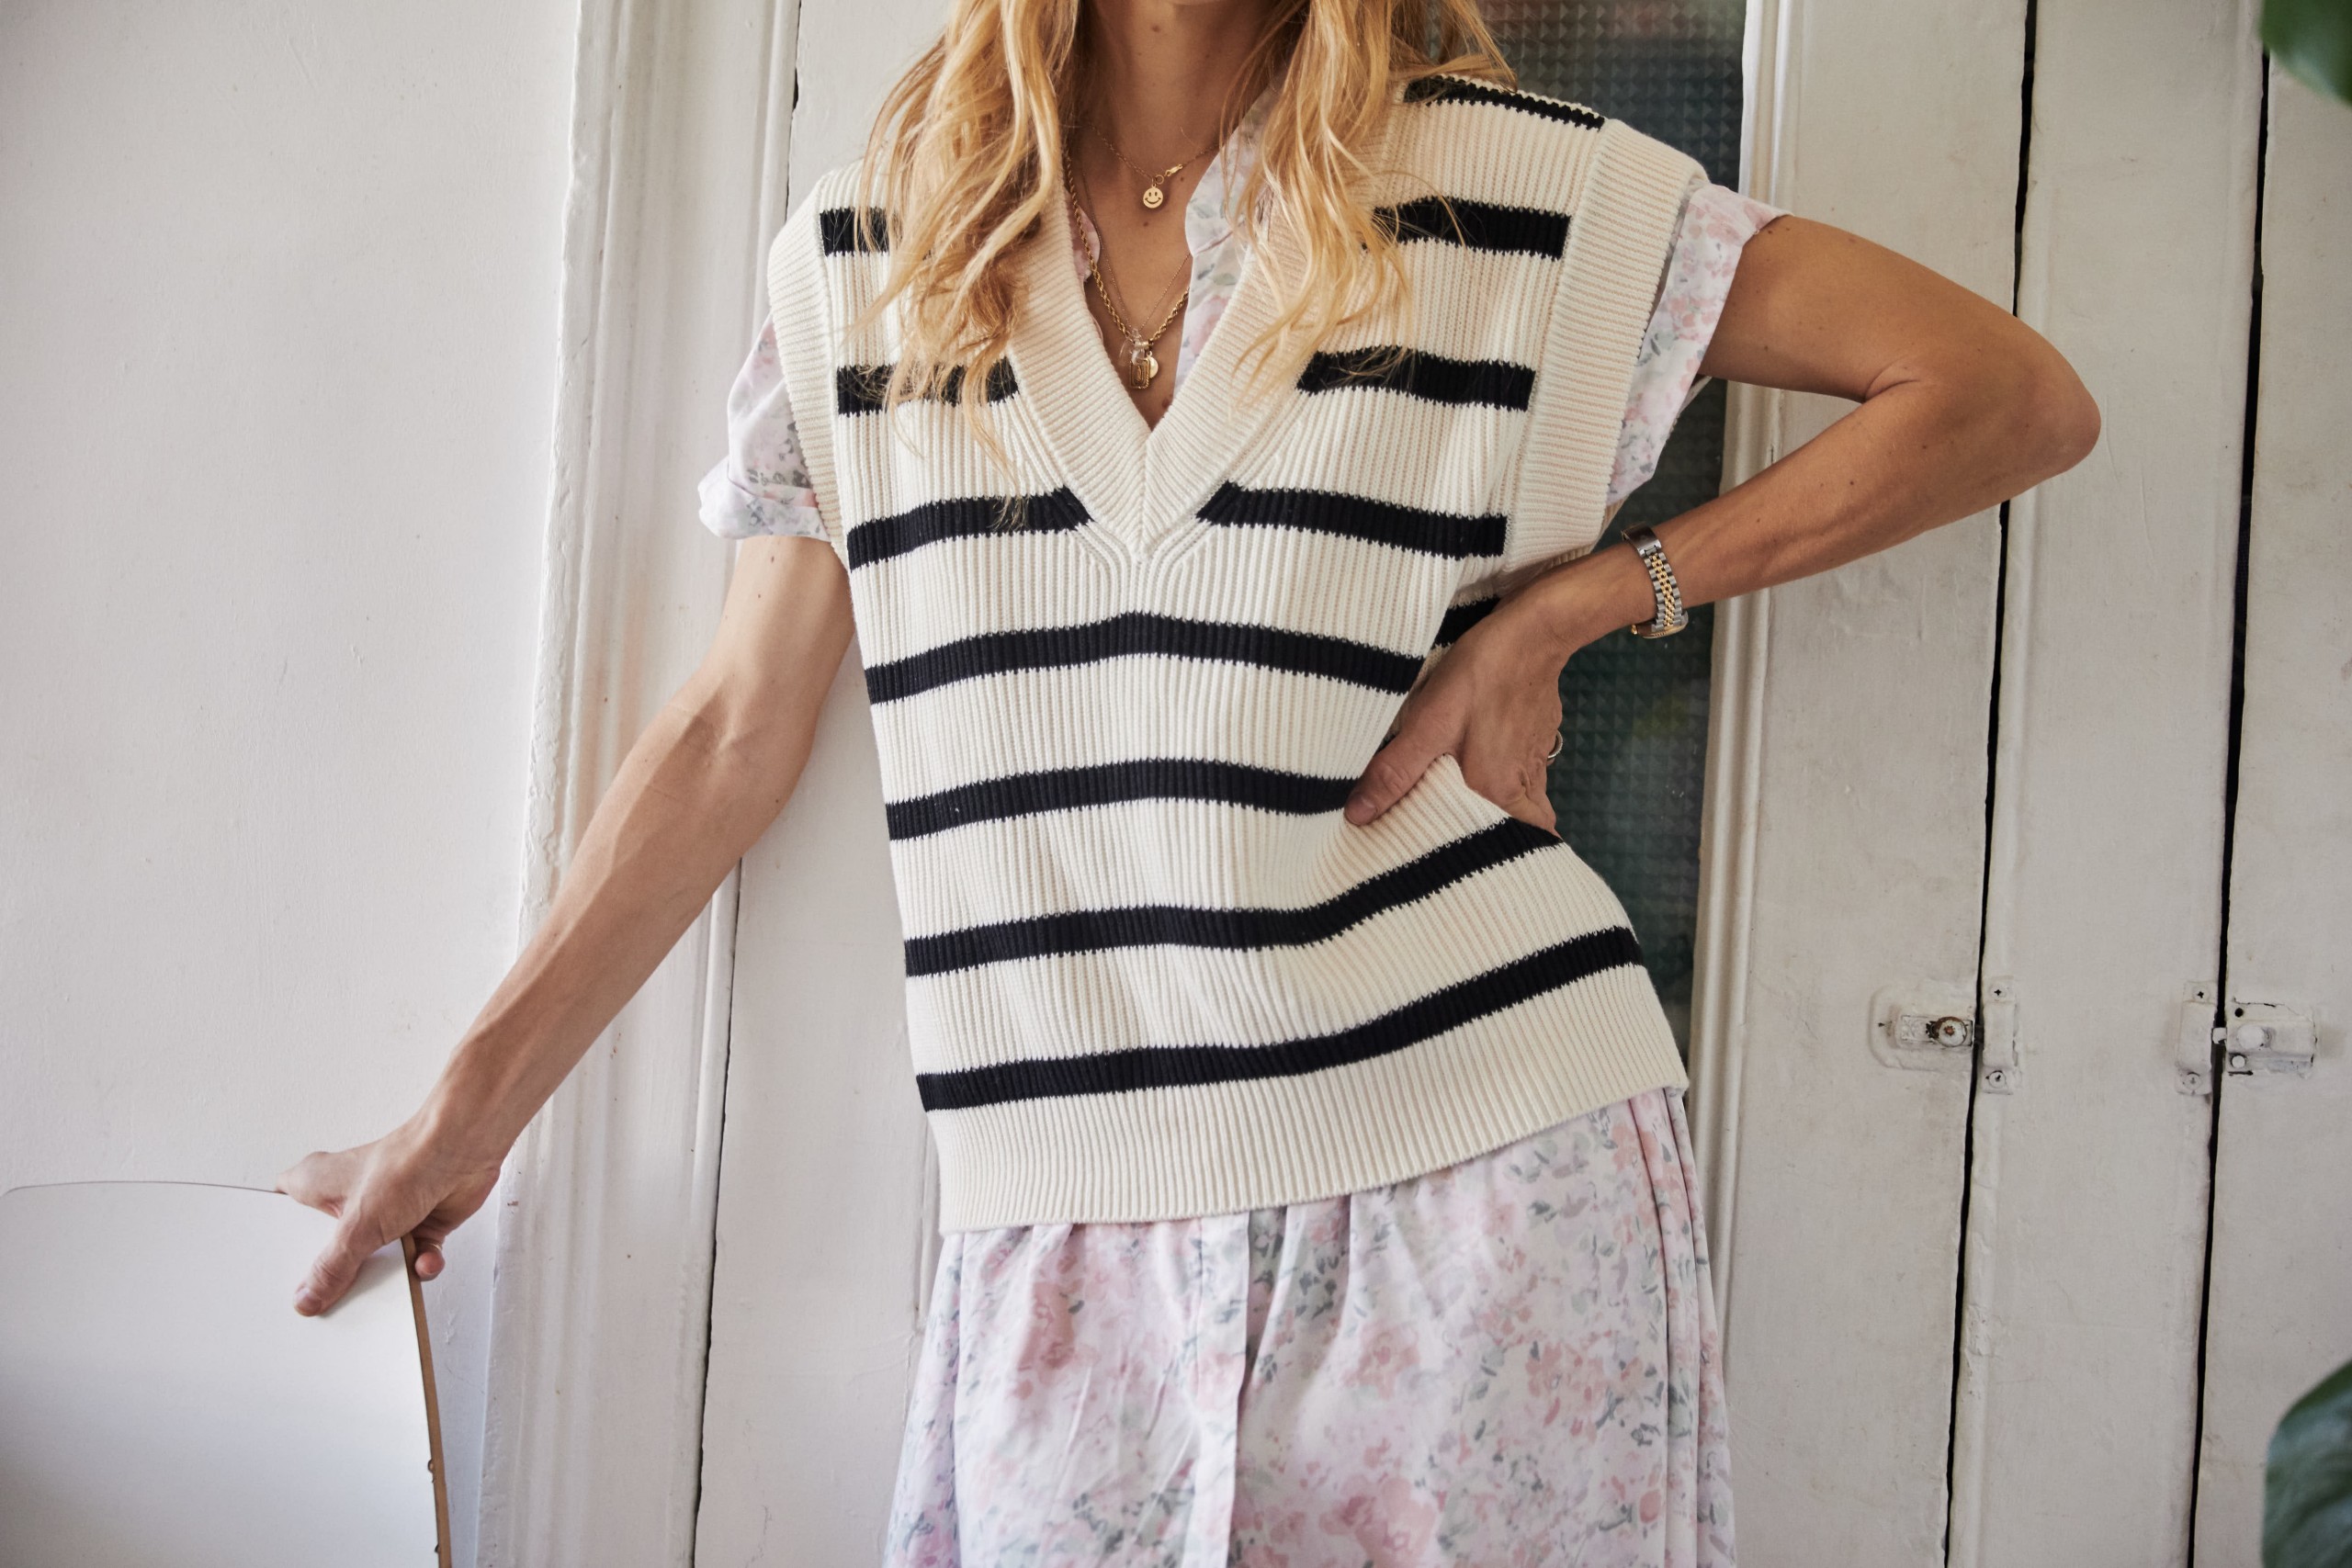 Amanda Kraemer Styles a Sweater Three Ways for Spring